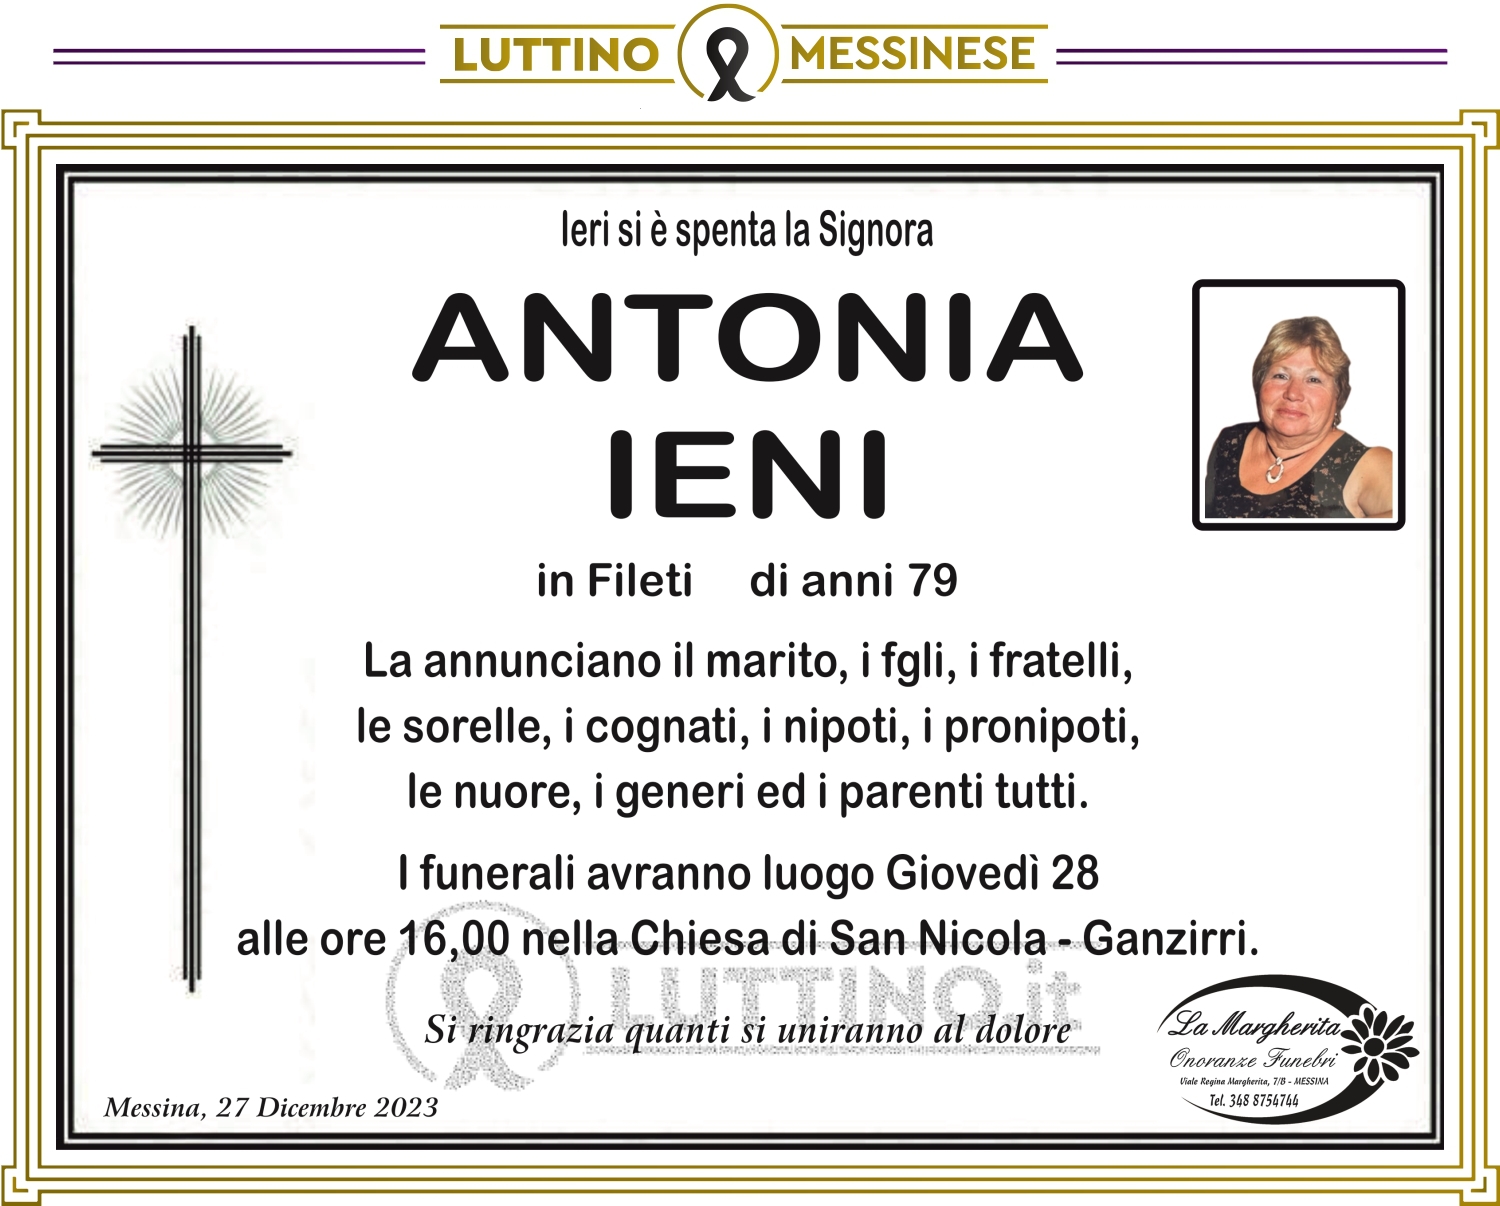 Antonia Ieni